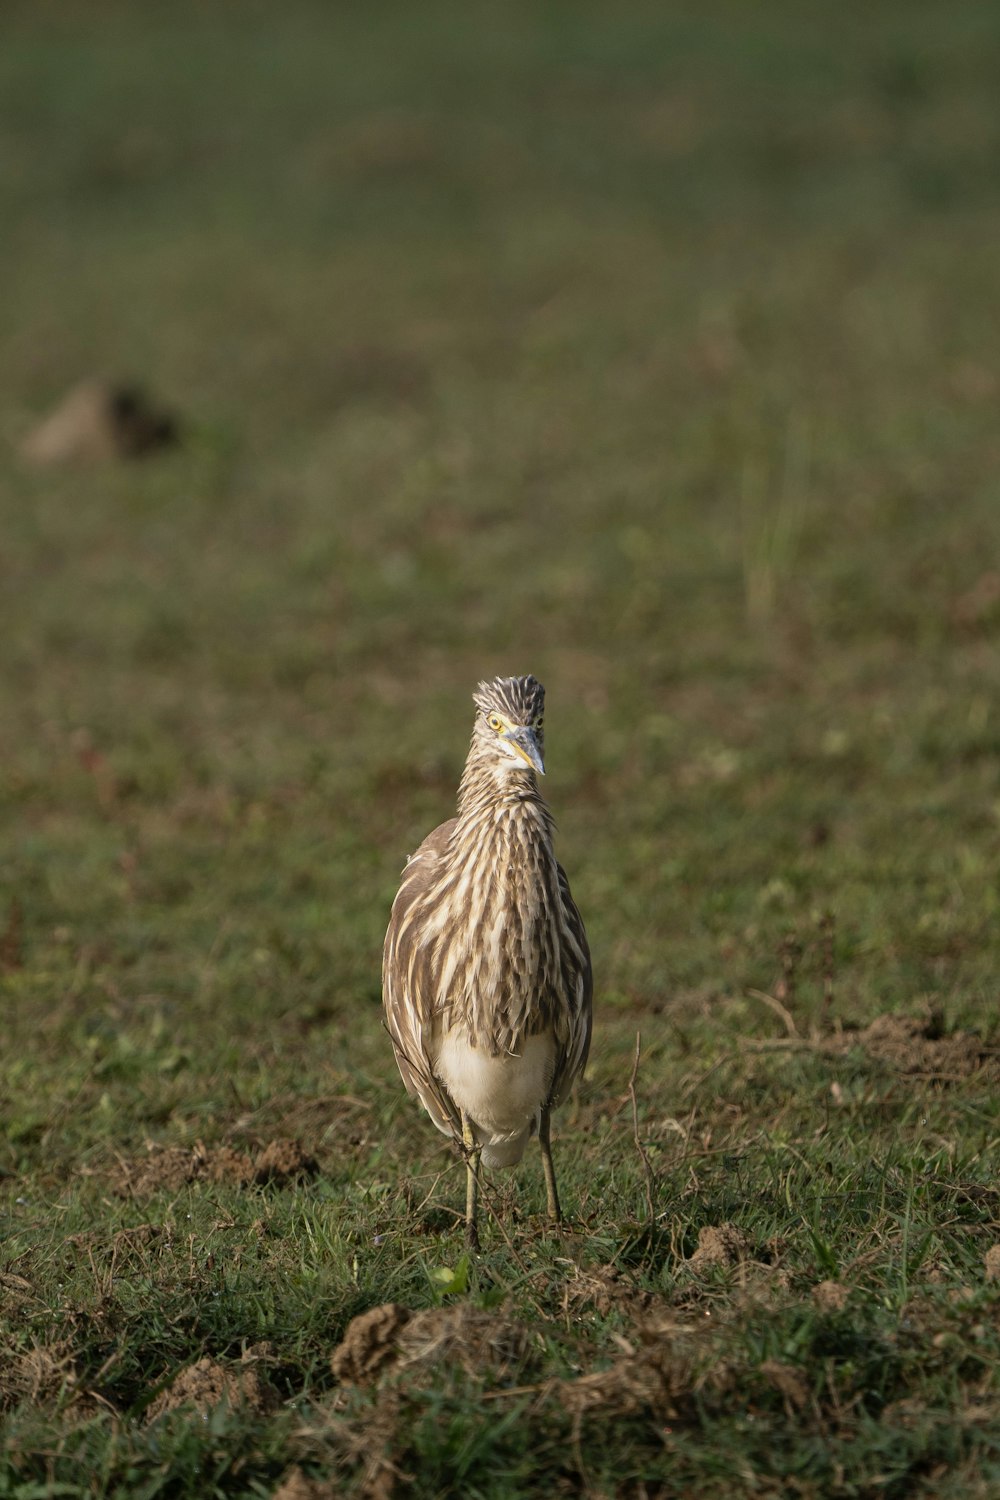 a bird is standing in a grassy field